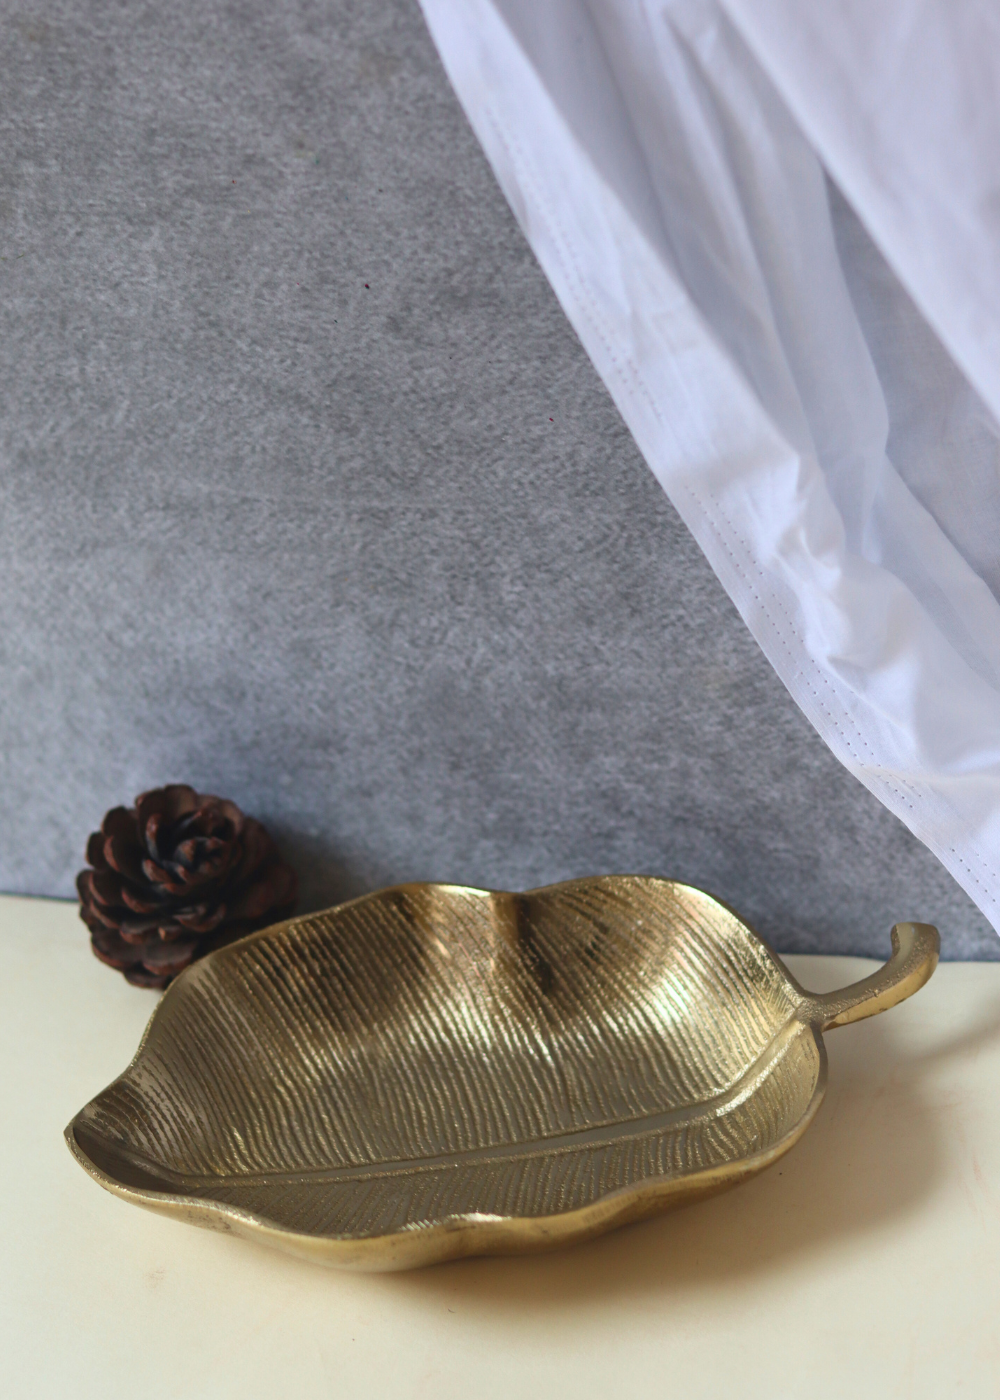 Handmade gold leaf bowl for snacks